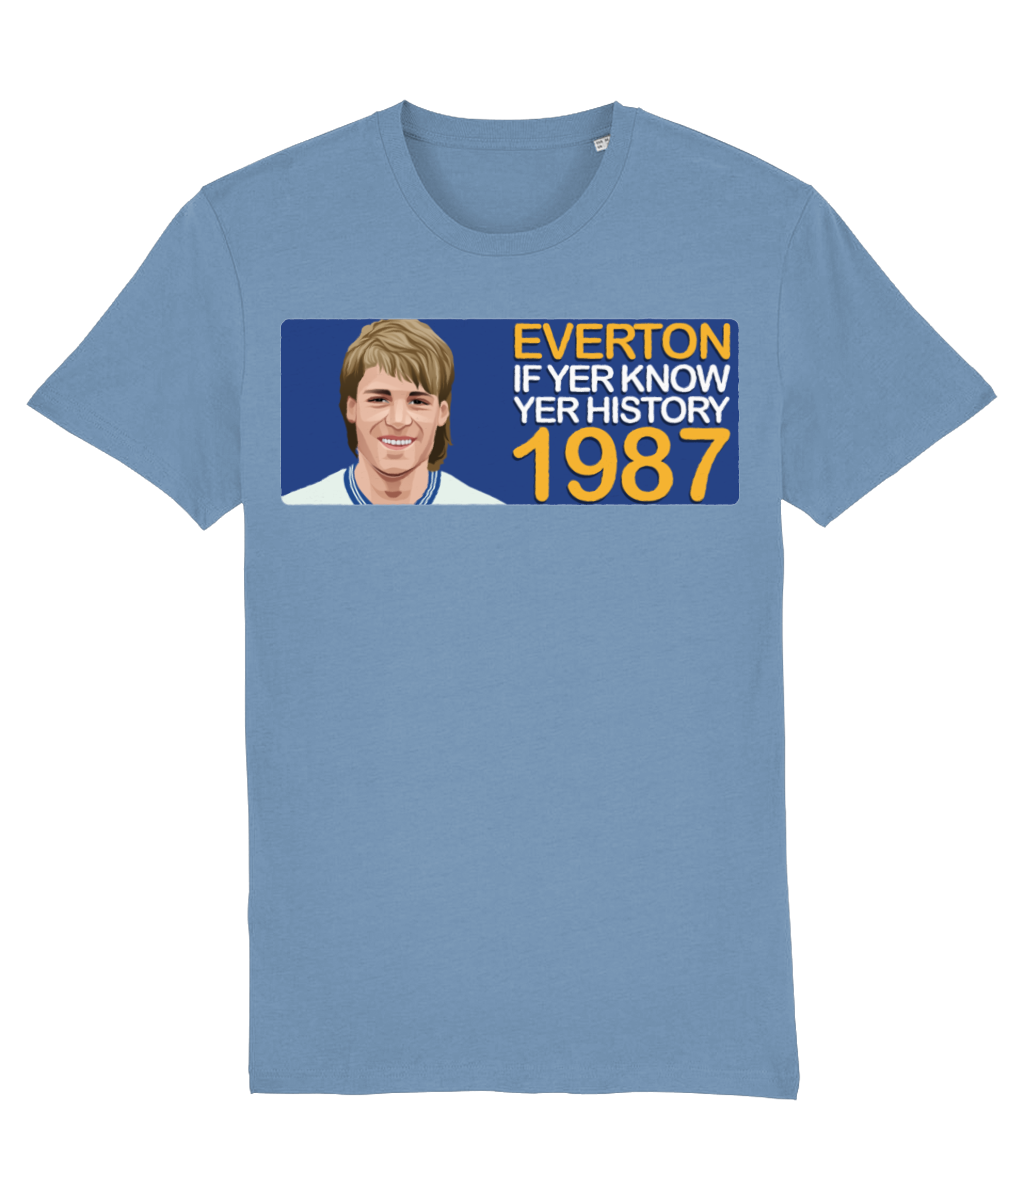 Everton 1987 Pat van den Hauwe If Yer Know Yer History Unisex T-Shirt Stanley/Stella Retrotext Mid Heather Blue XX-Small 